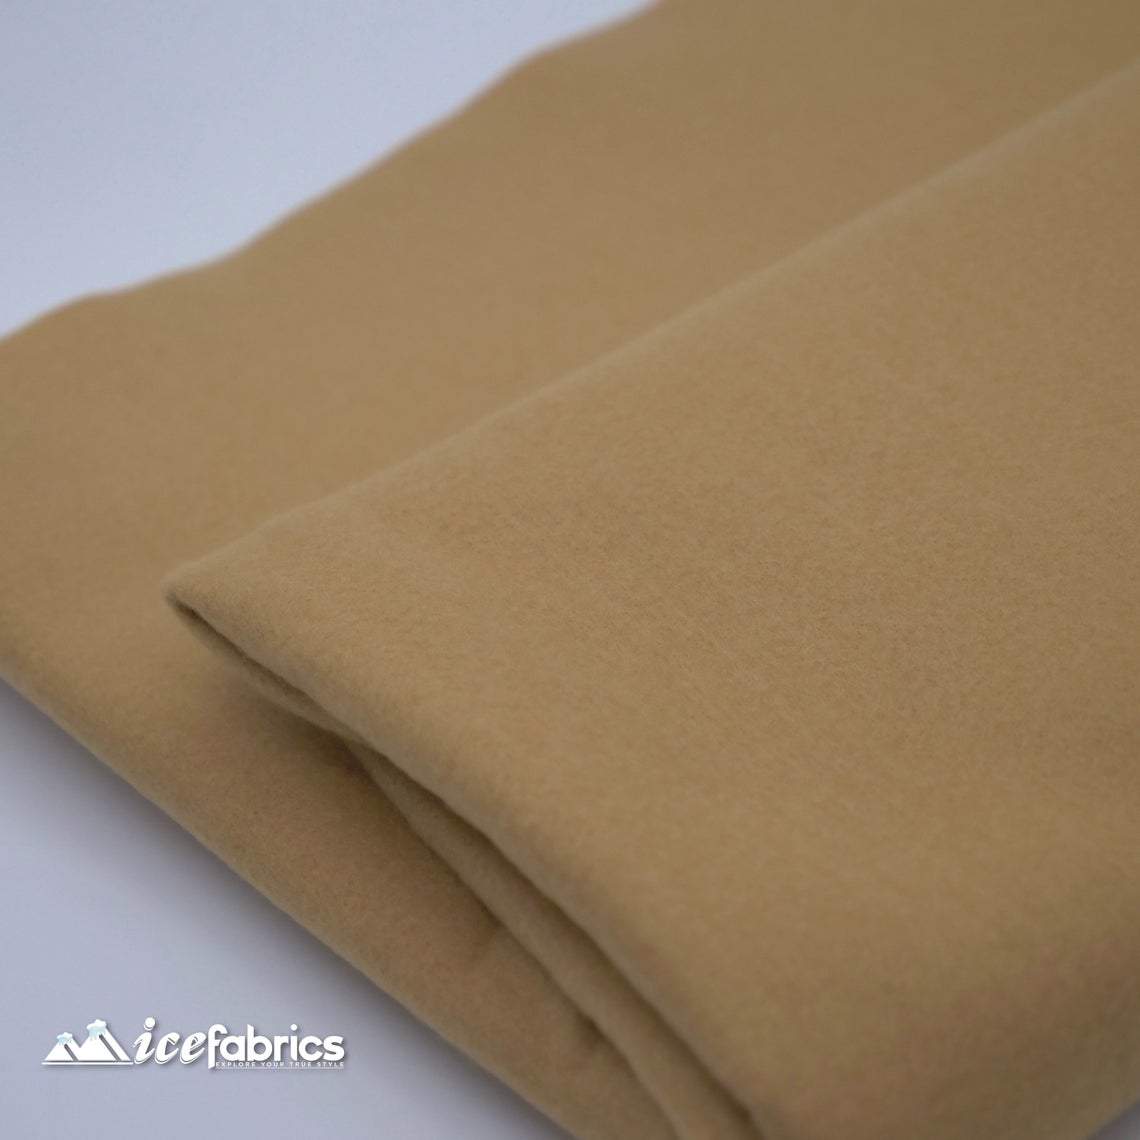 Acrylic Felt Fabric By The Roll | 20 yards | Wholesale Fabric ICE FABRICS